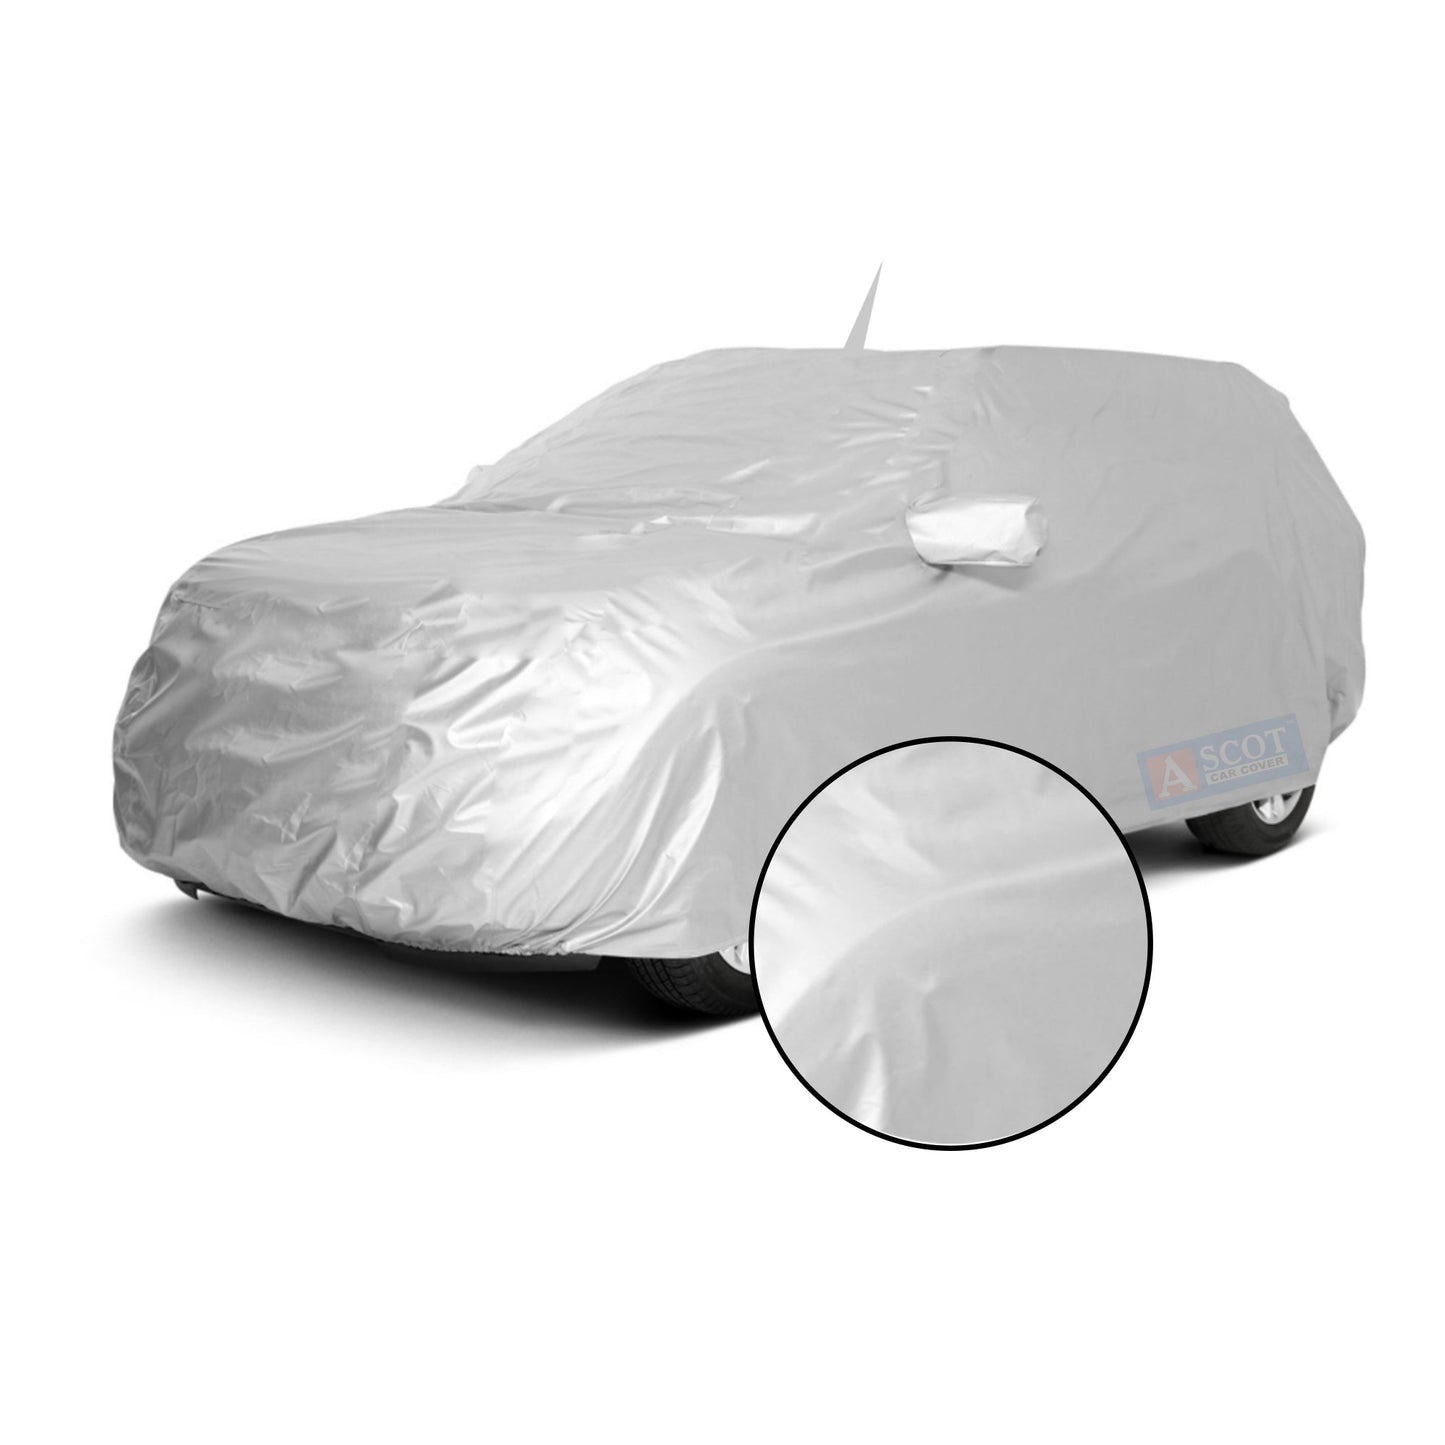 Ascot Hyundai Grand i10 2013-2019 Model Car Body Cover Dust Proof, Trippel Stitched